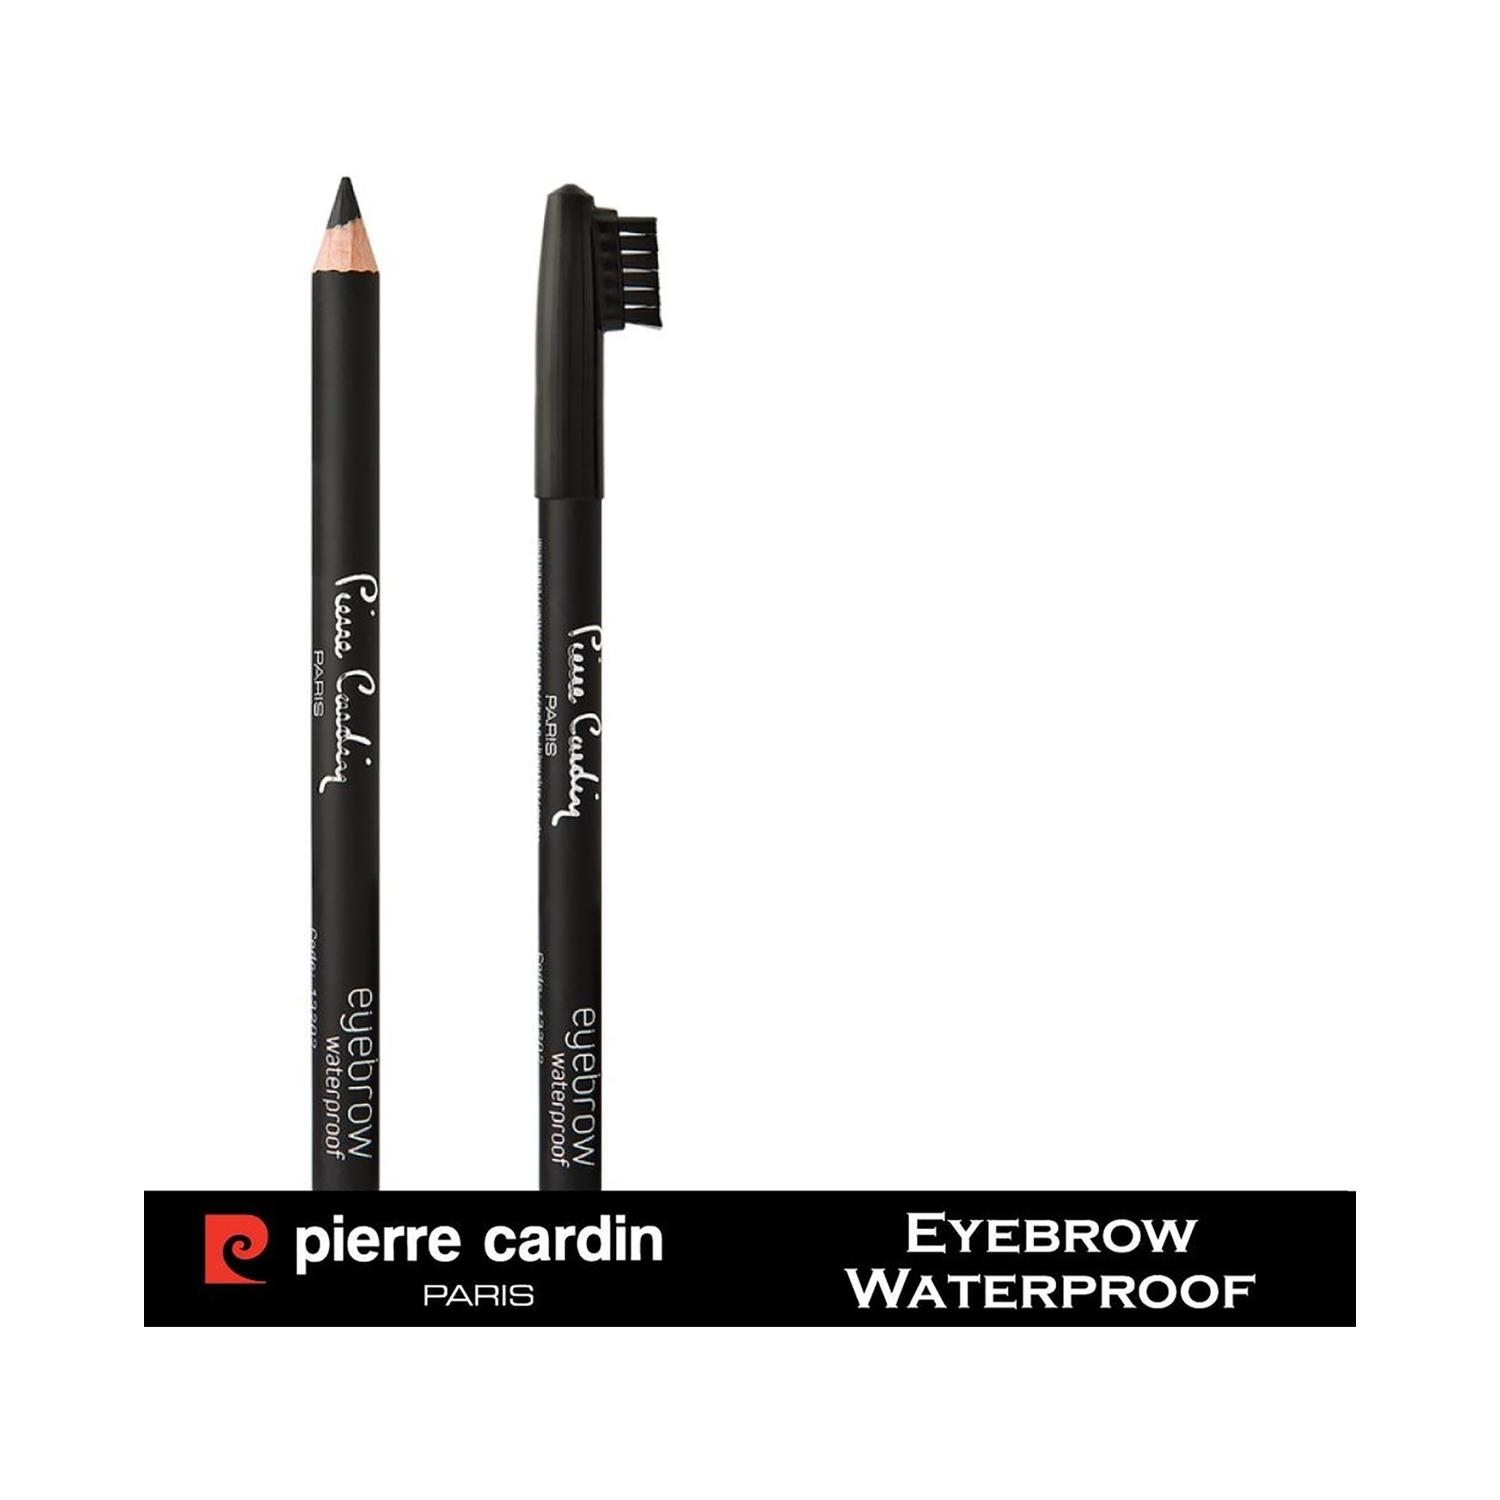 pierre cardin paris waterproof sculpting eyebrow pencil - 300 current mood (0.4g)